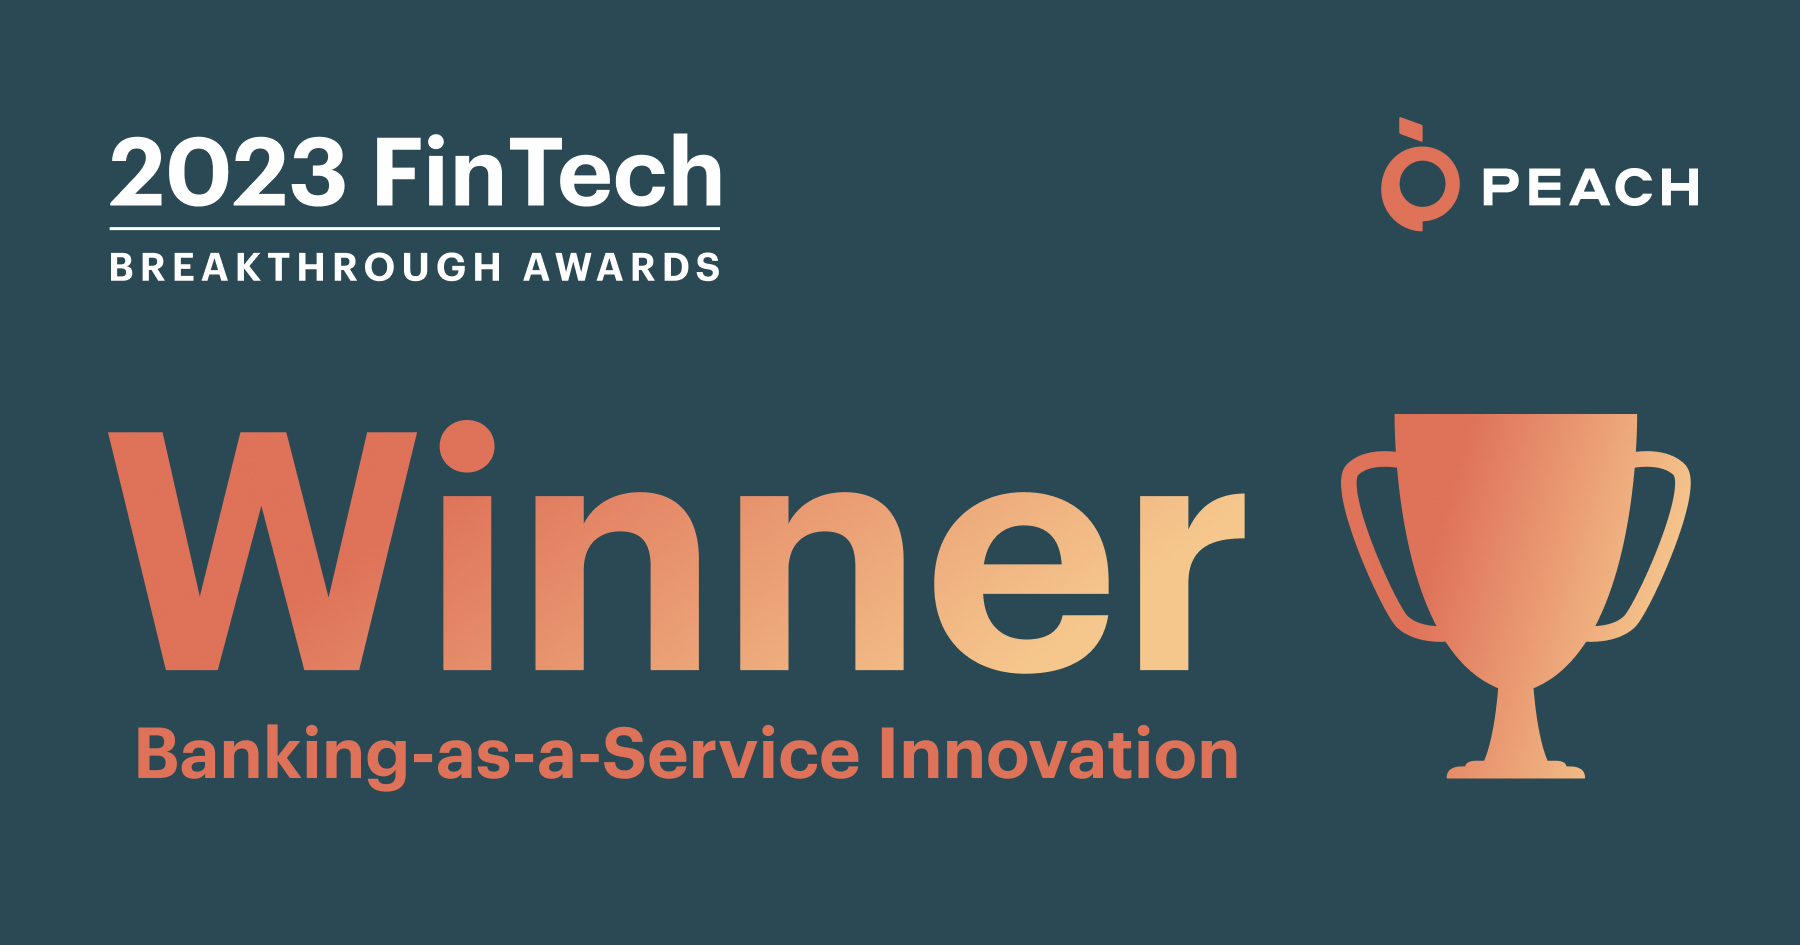 Peach wins 2023 FinTech Breakthrough Award for Banking-as-a-Service Innovation